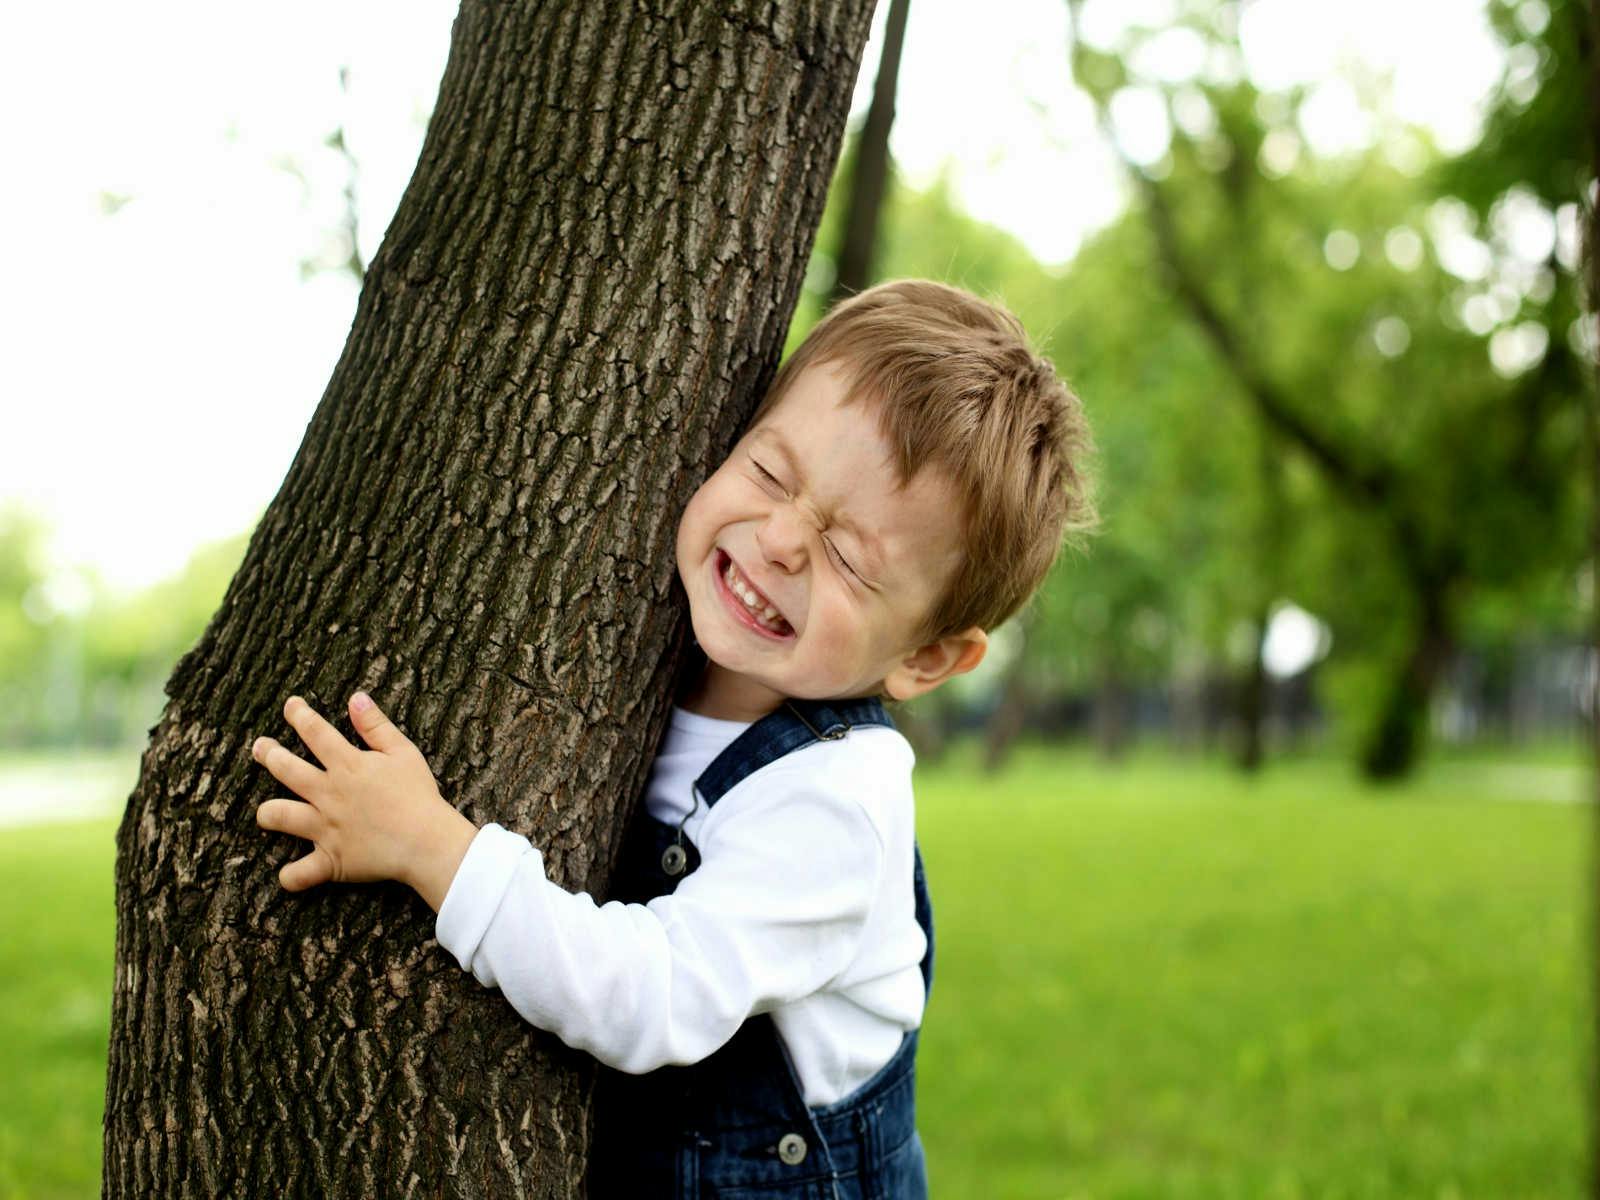 Включи рядом ребенок. Ребенок обнимает дерево. Дети около дерево. Ребенок возле дерева. Мальчик около дерева.